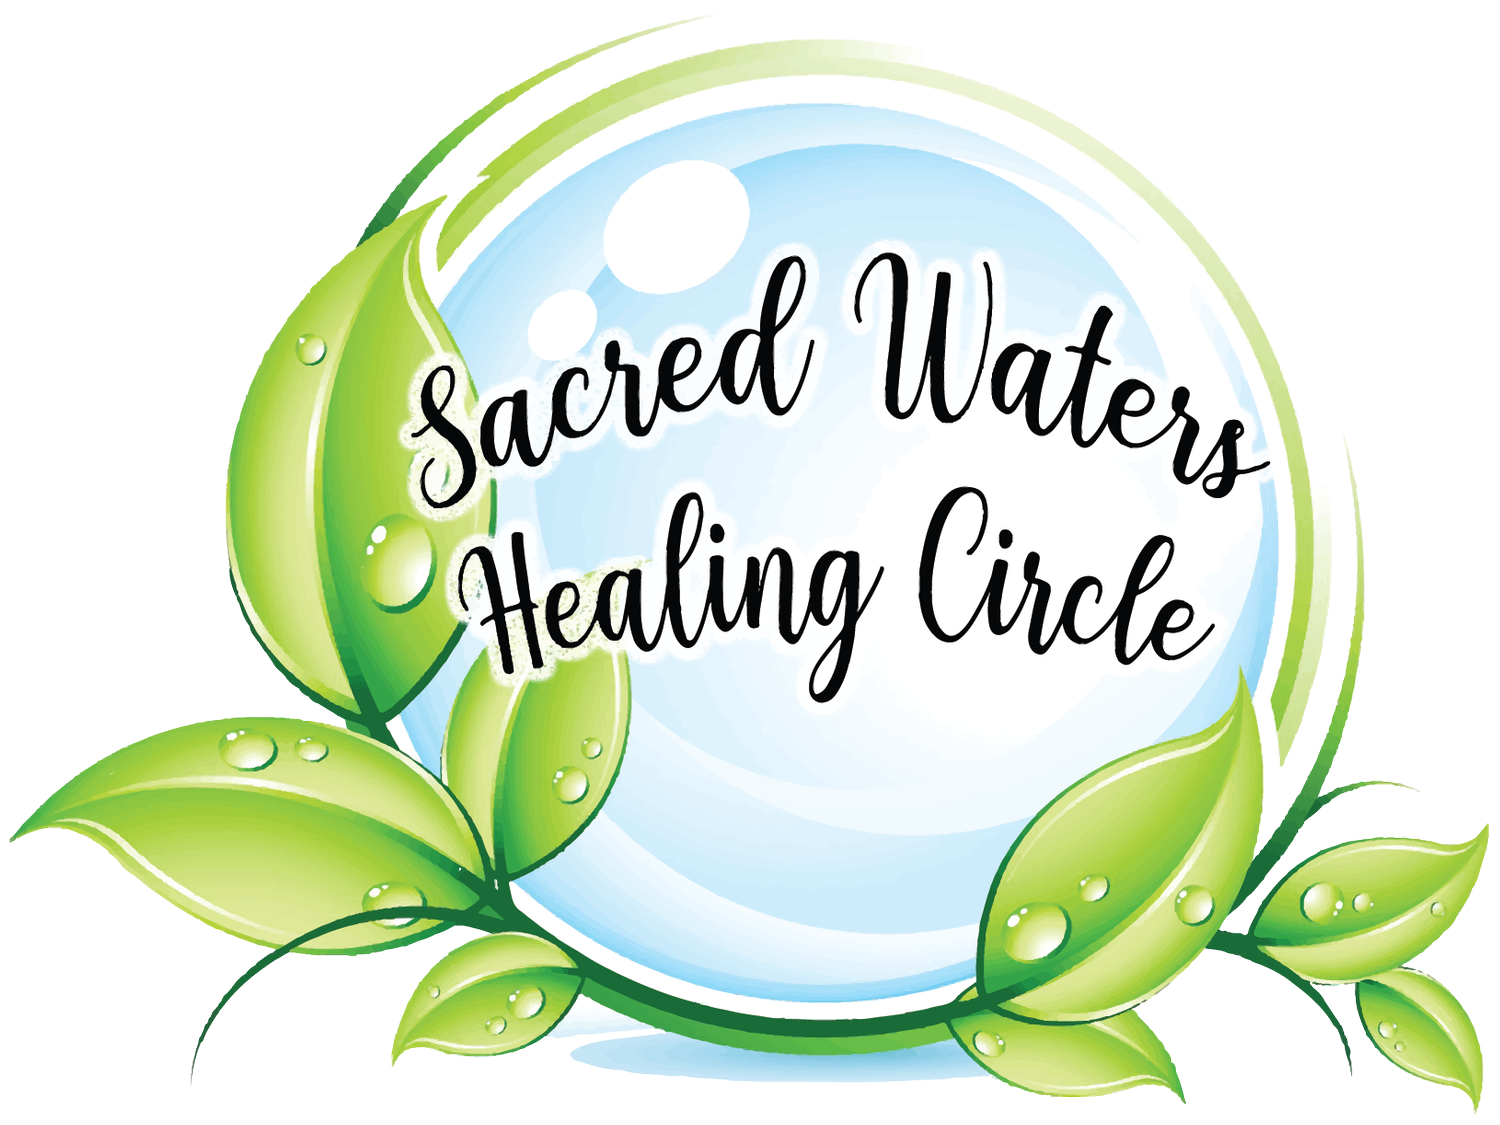 Sacred Waters Healing Cirle